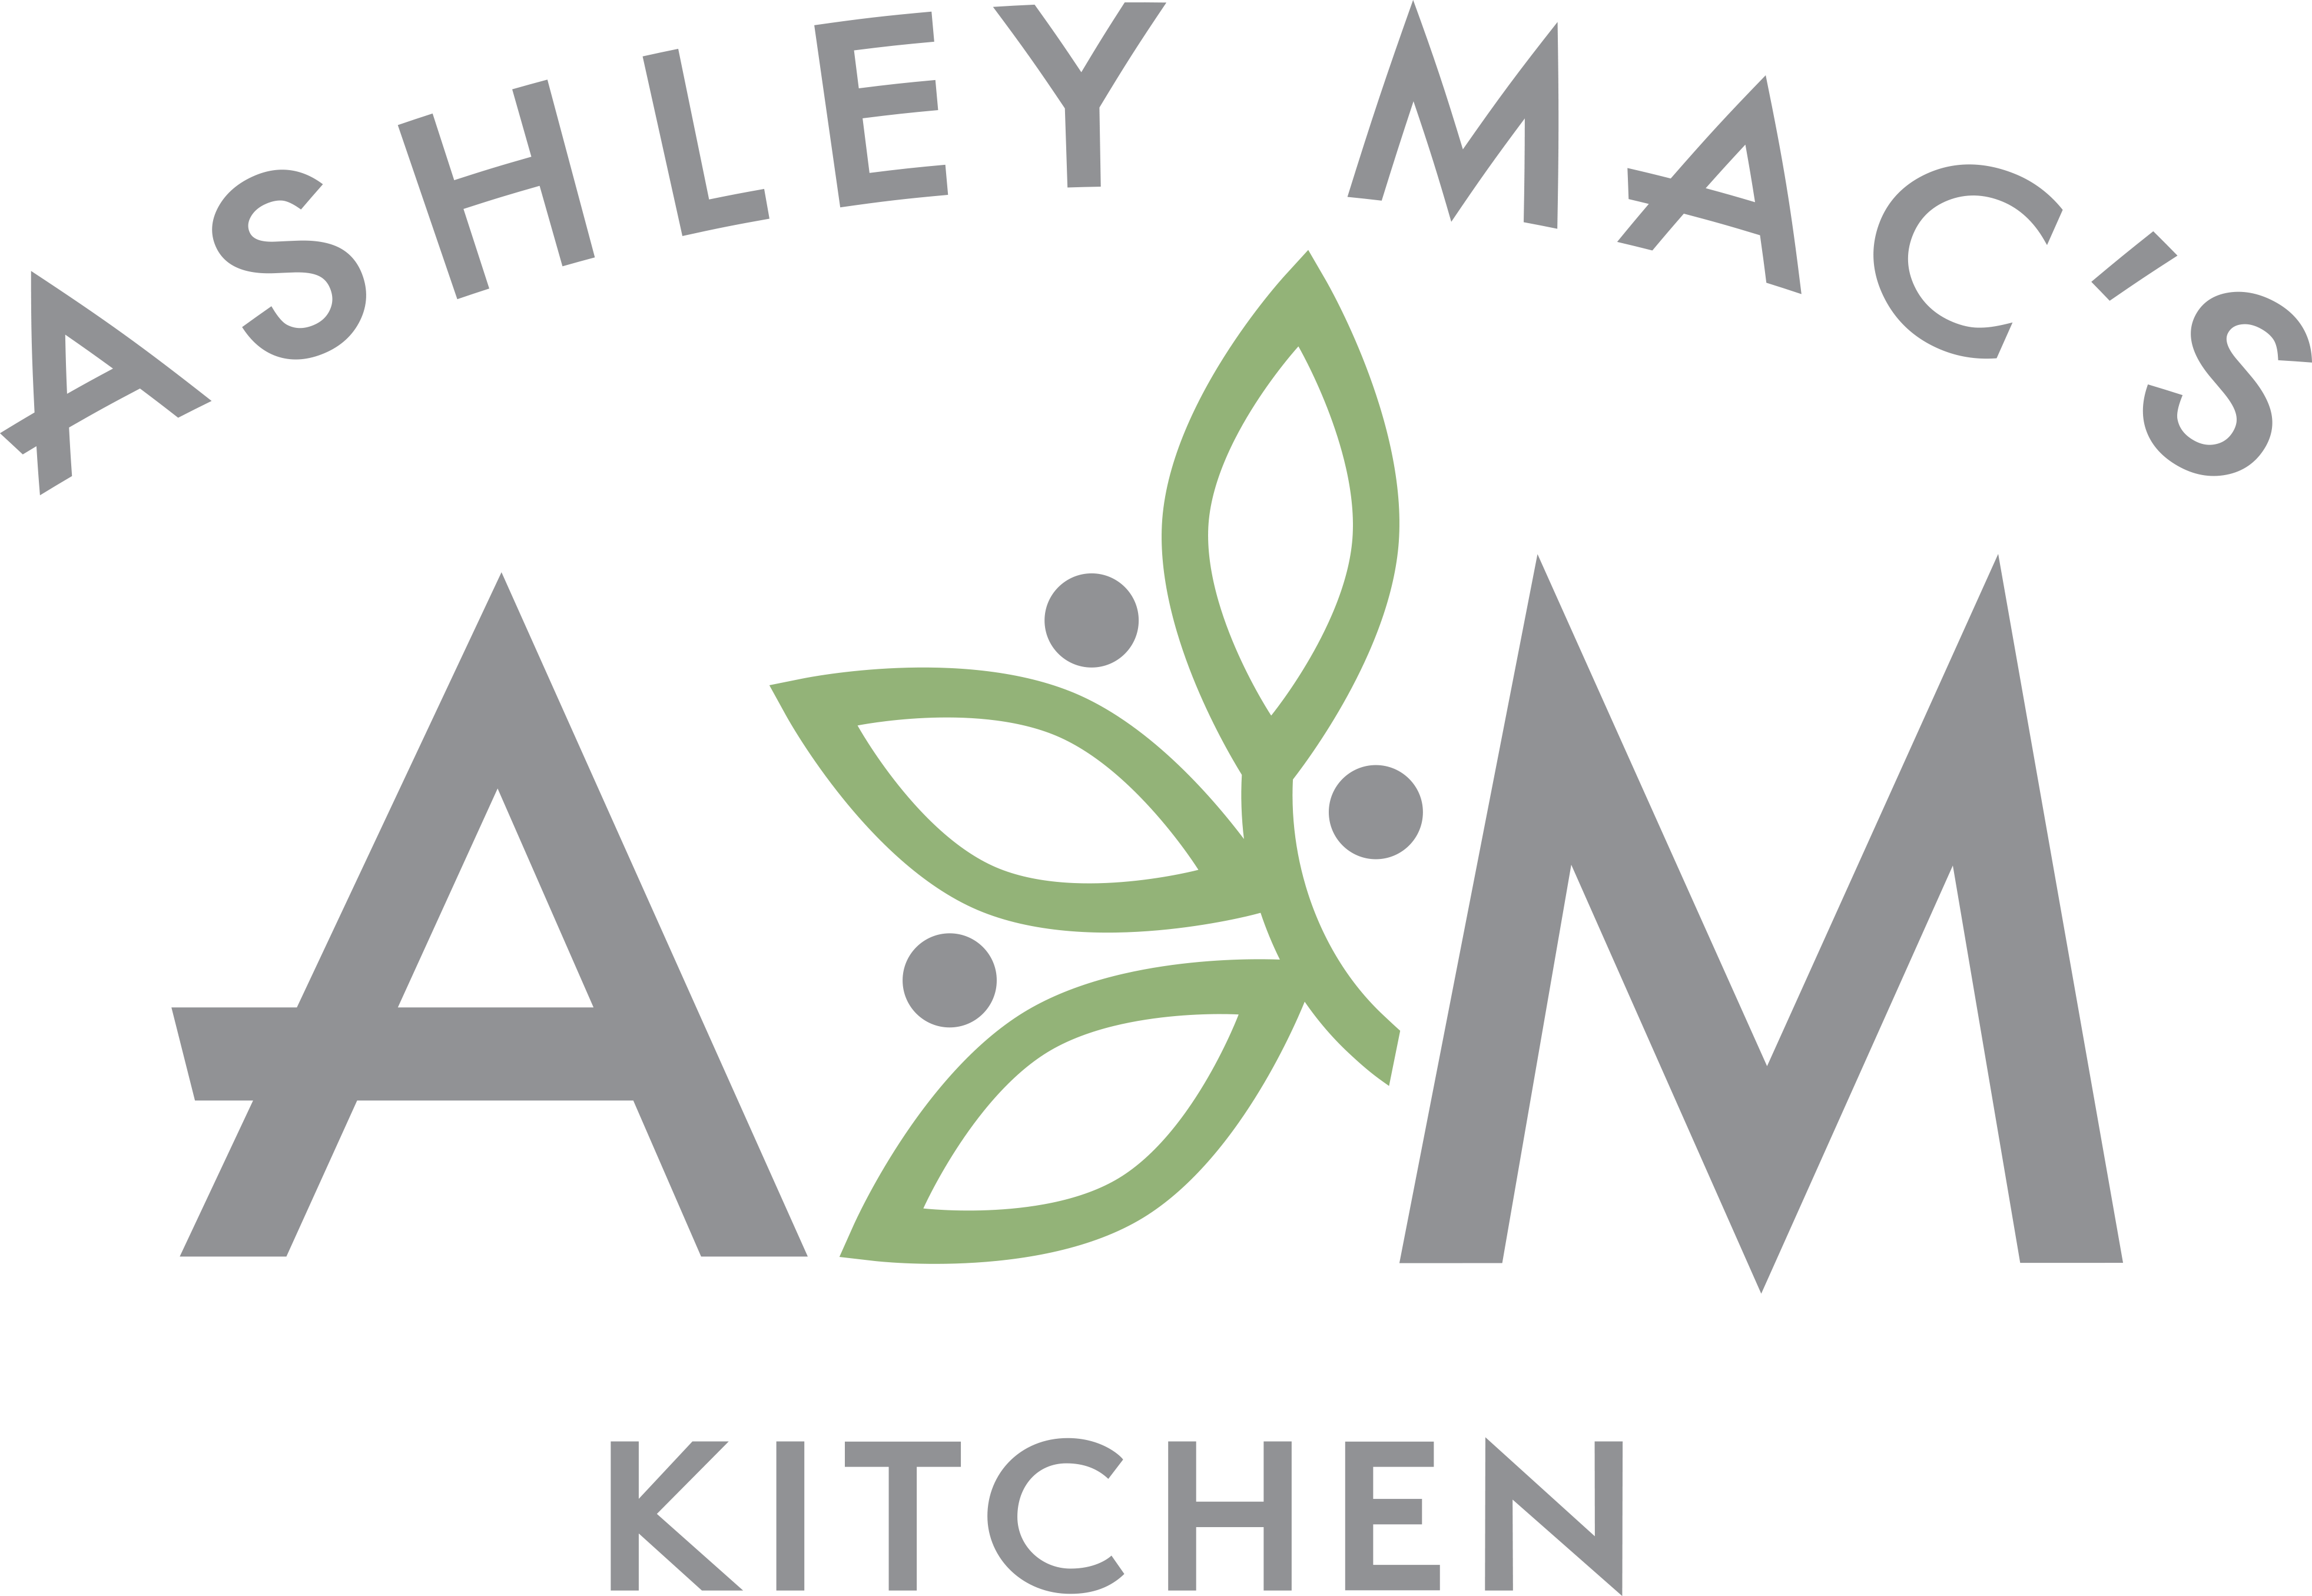 Ashley Mac's Home